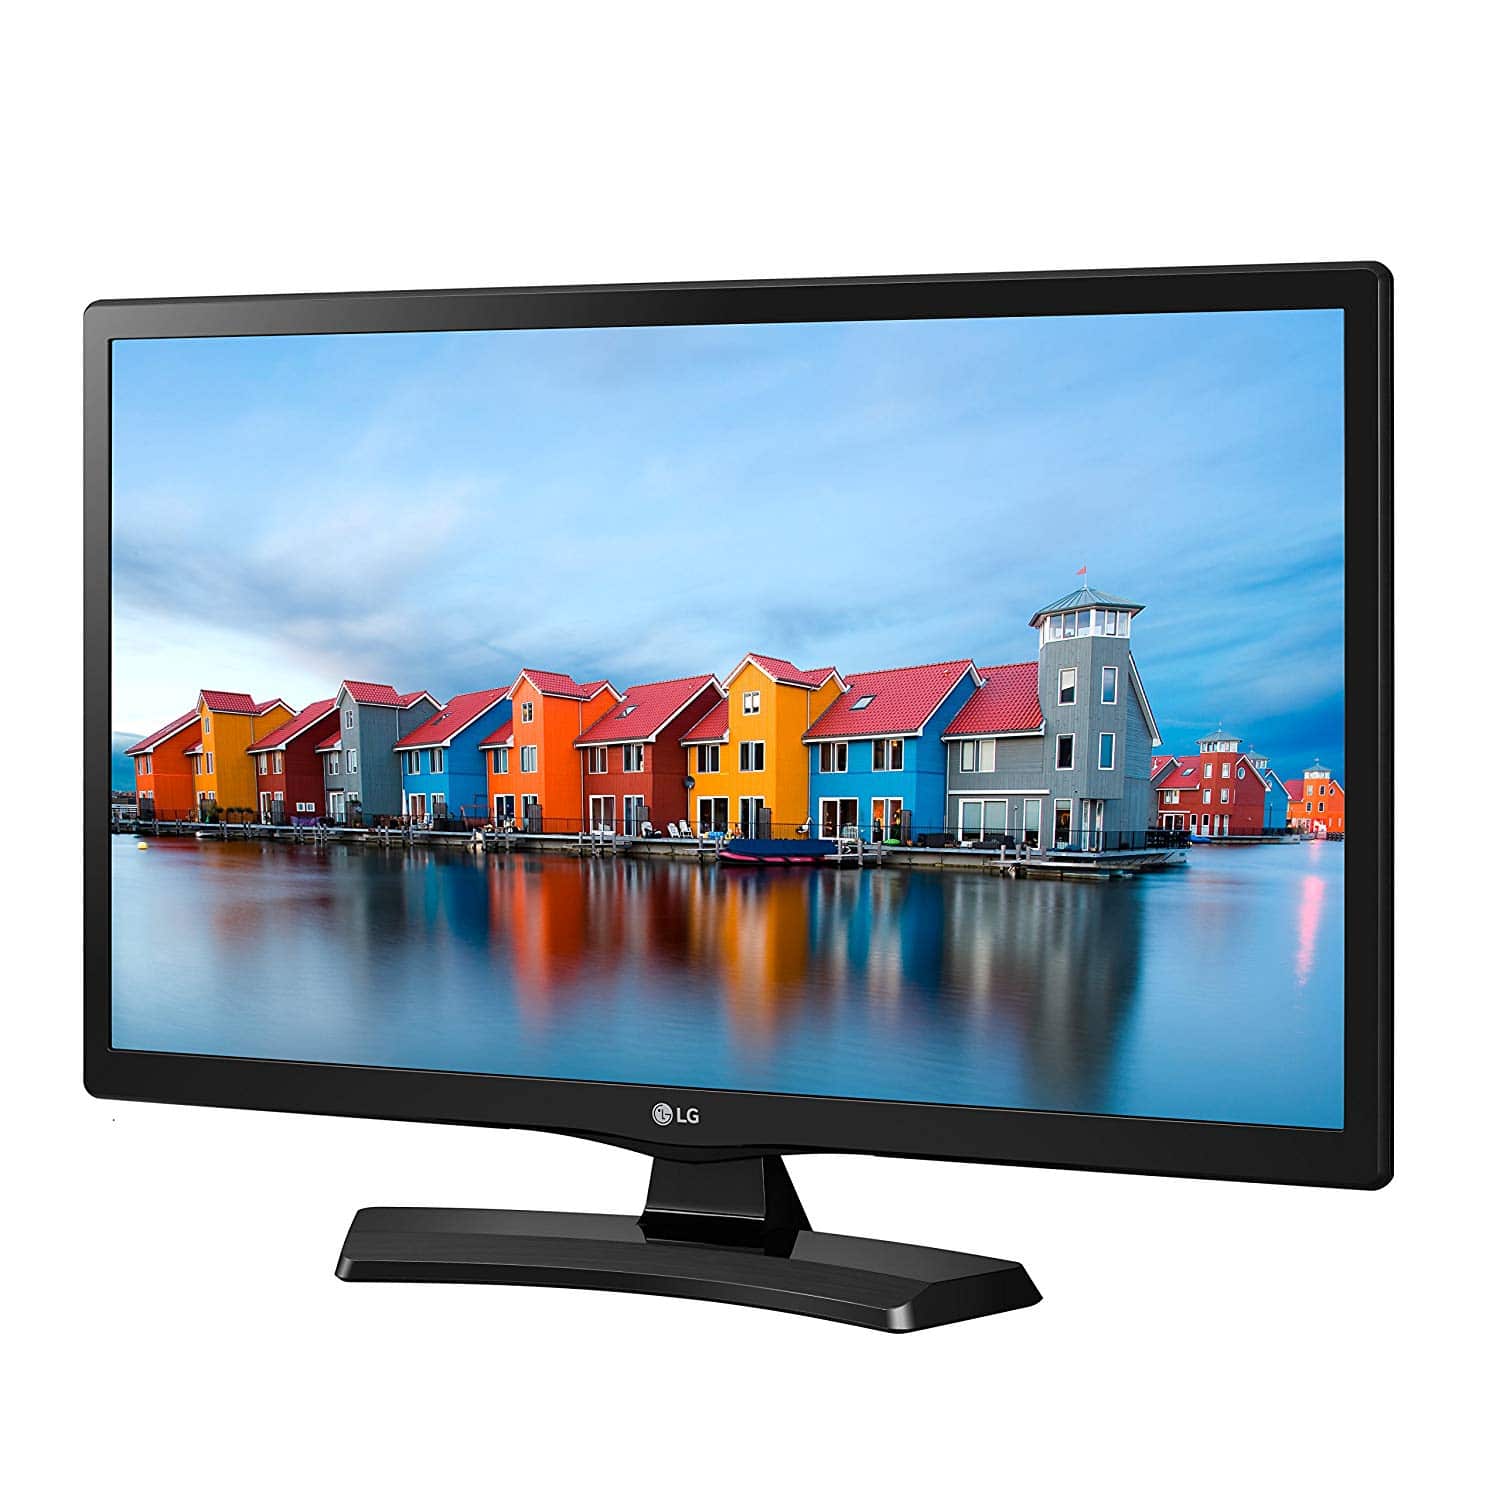 LG Electronics Smart LED TV, LG Electronics Smart LED TV review